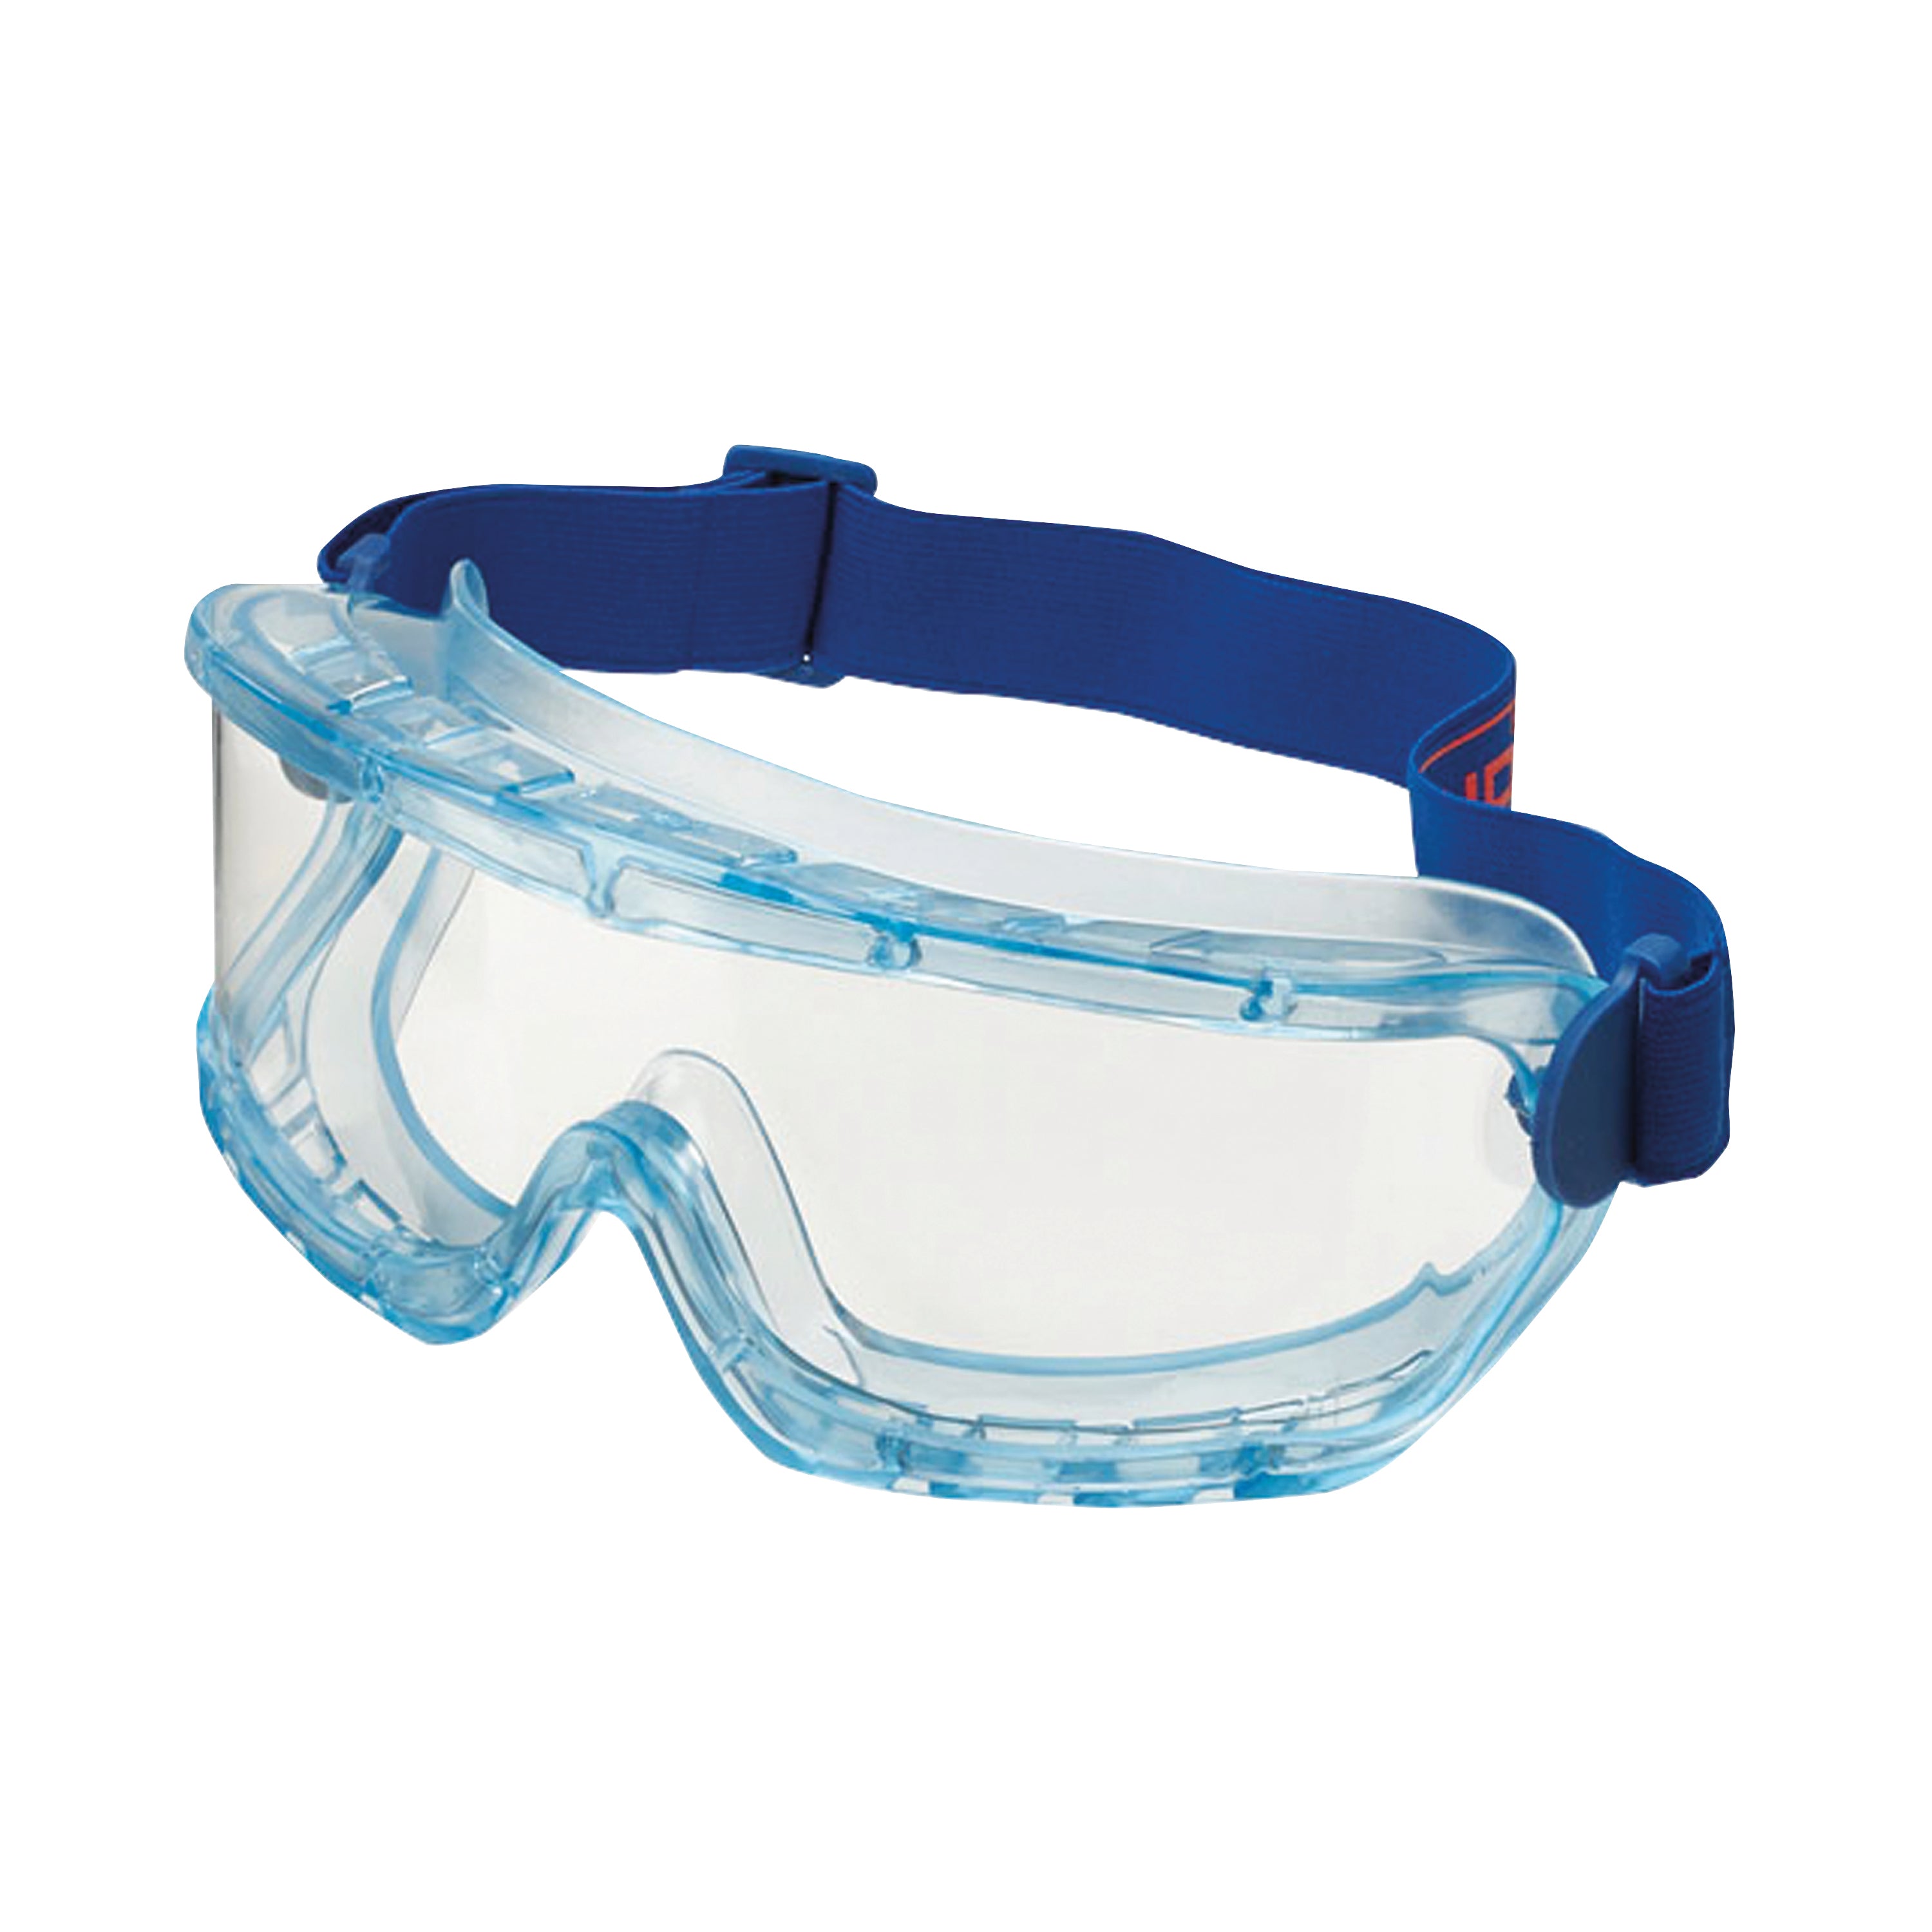 B-Brand Premium Safety Goggles Blue BBPGBF